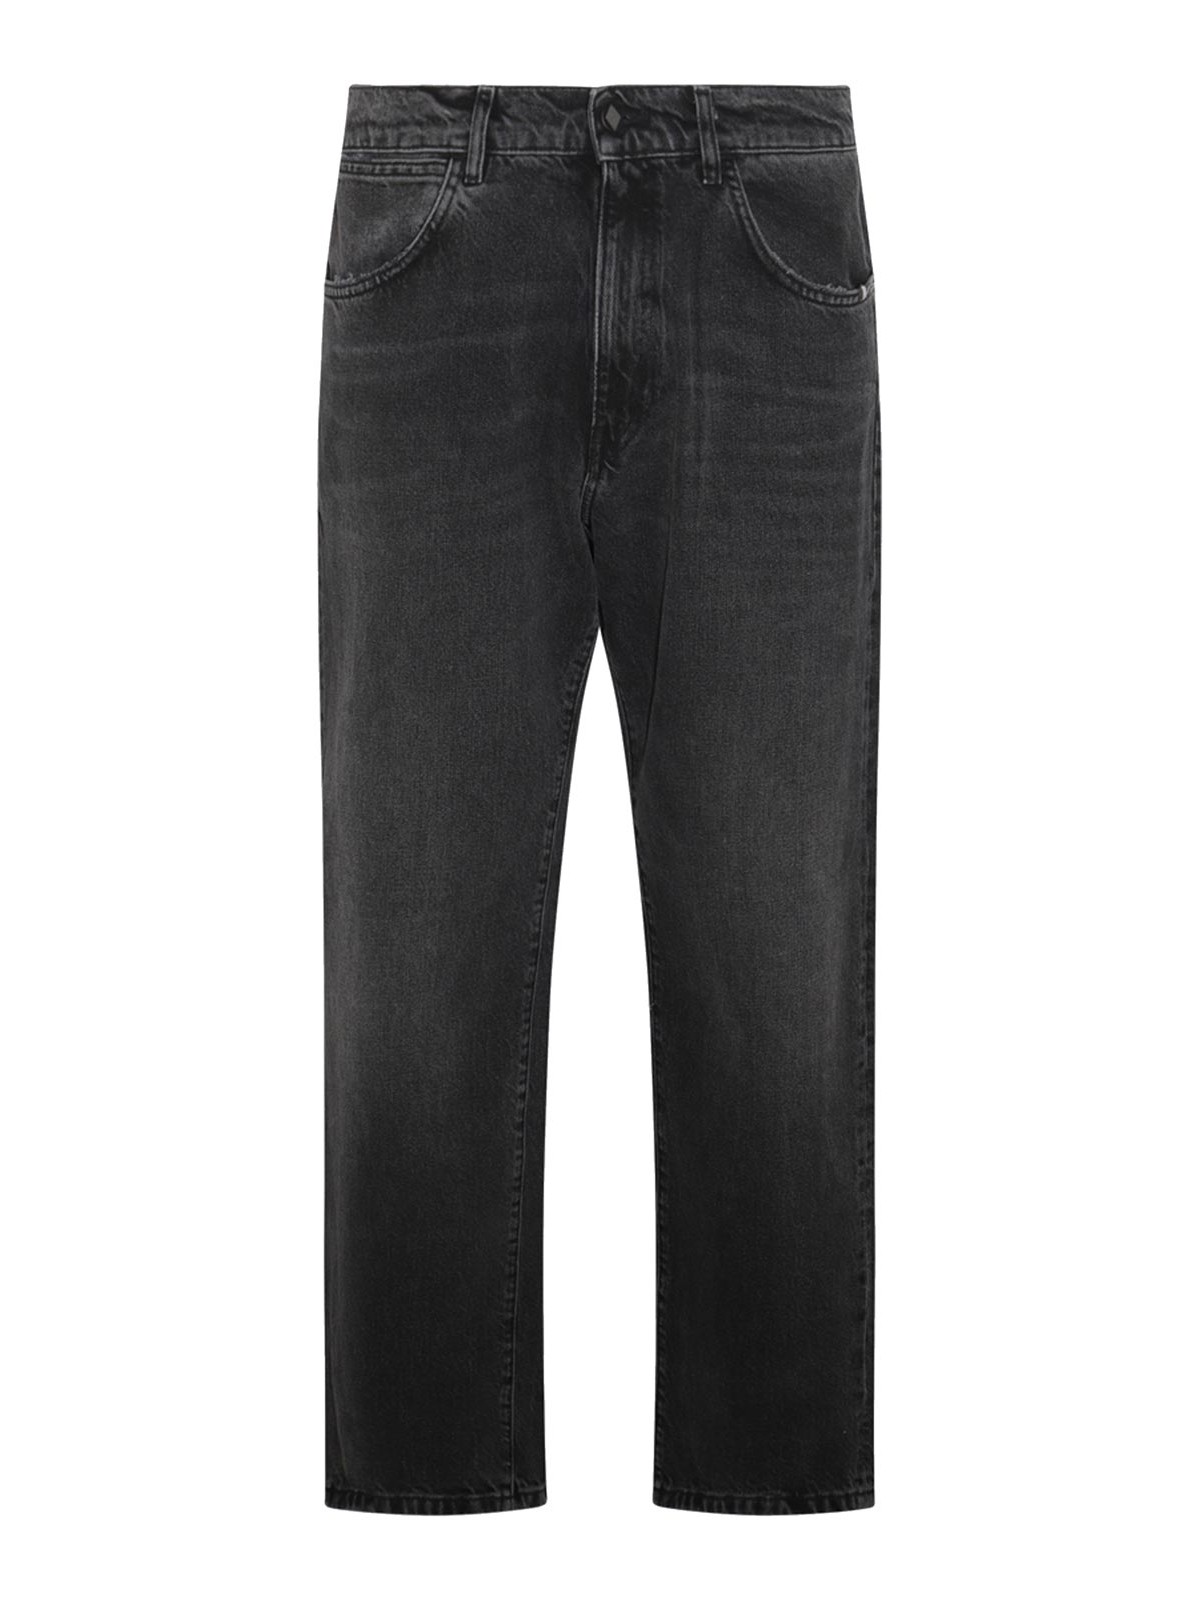 Amish Black Denim Jeans